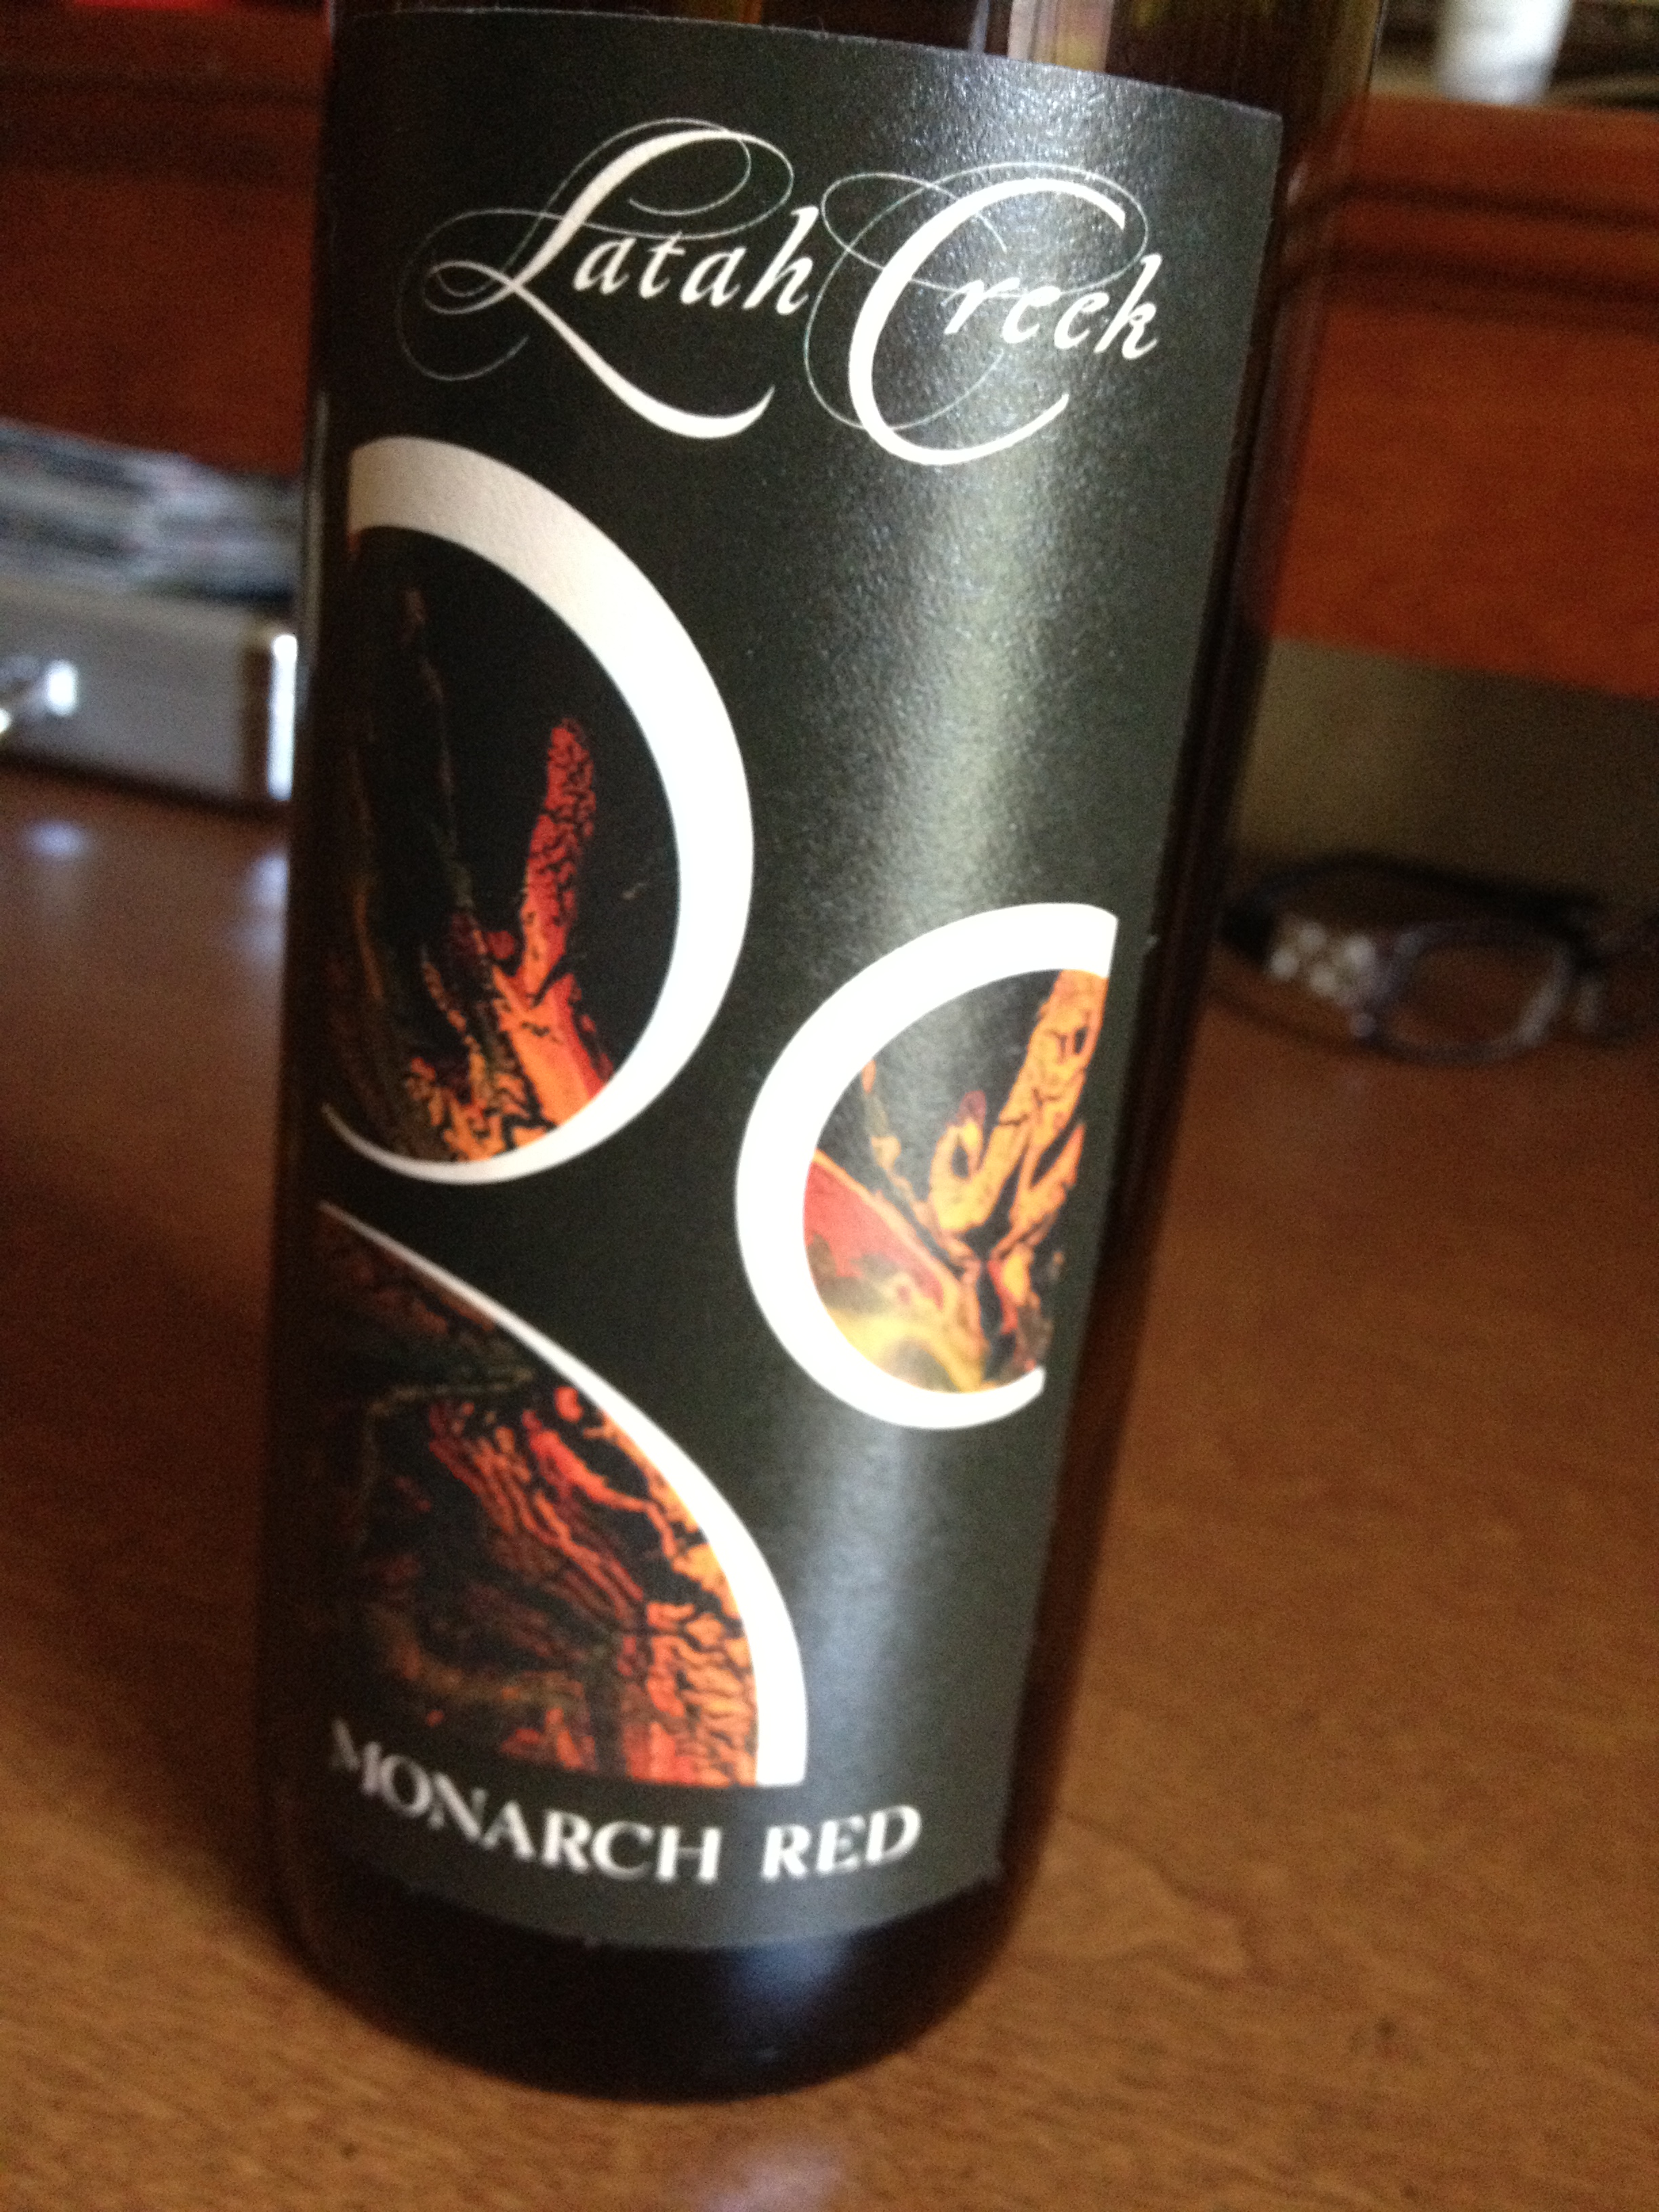 Pair This: Latah Creek Monarch Red & Super Sharp Cheddar